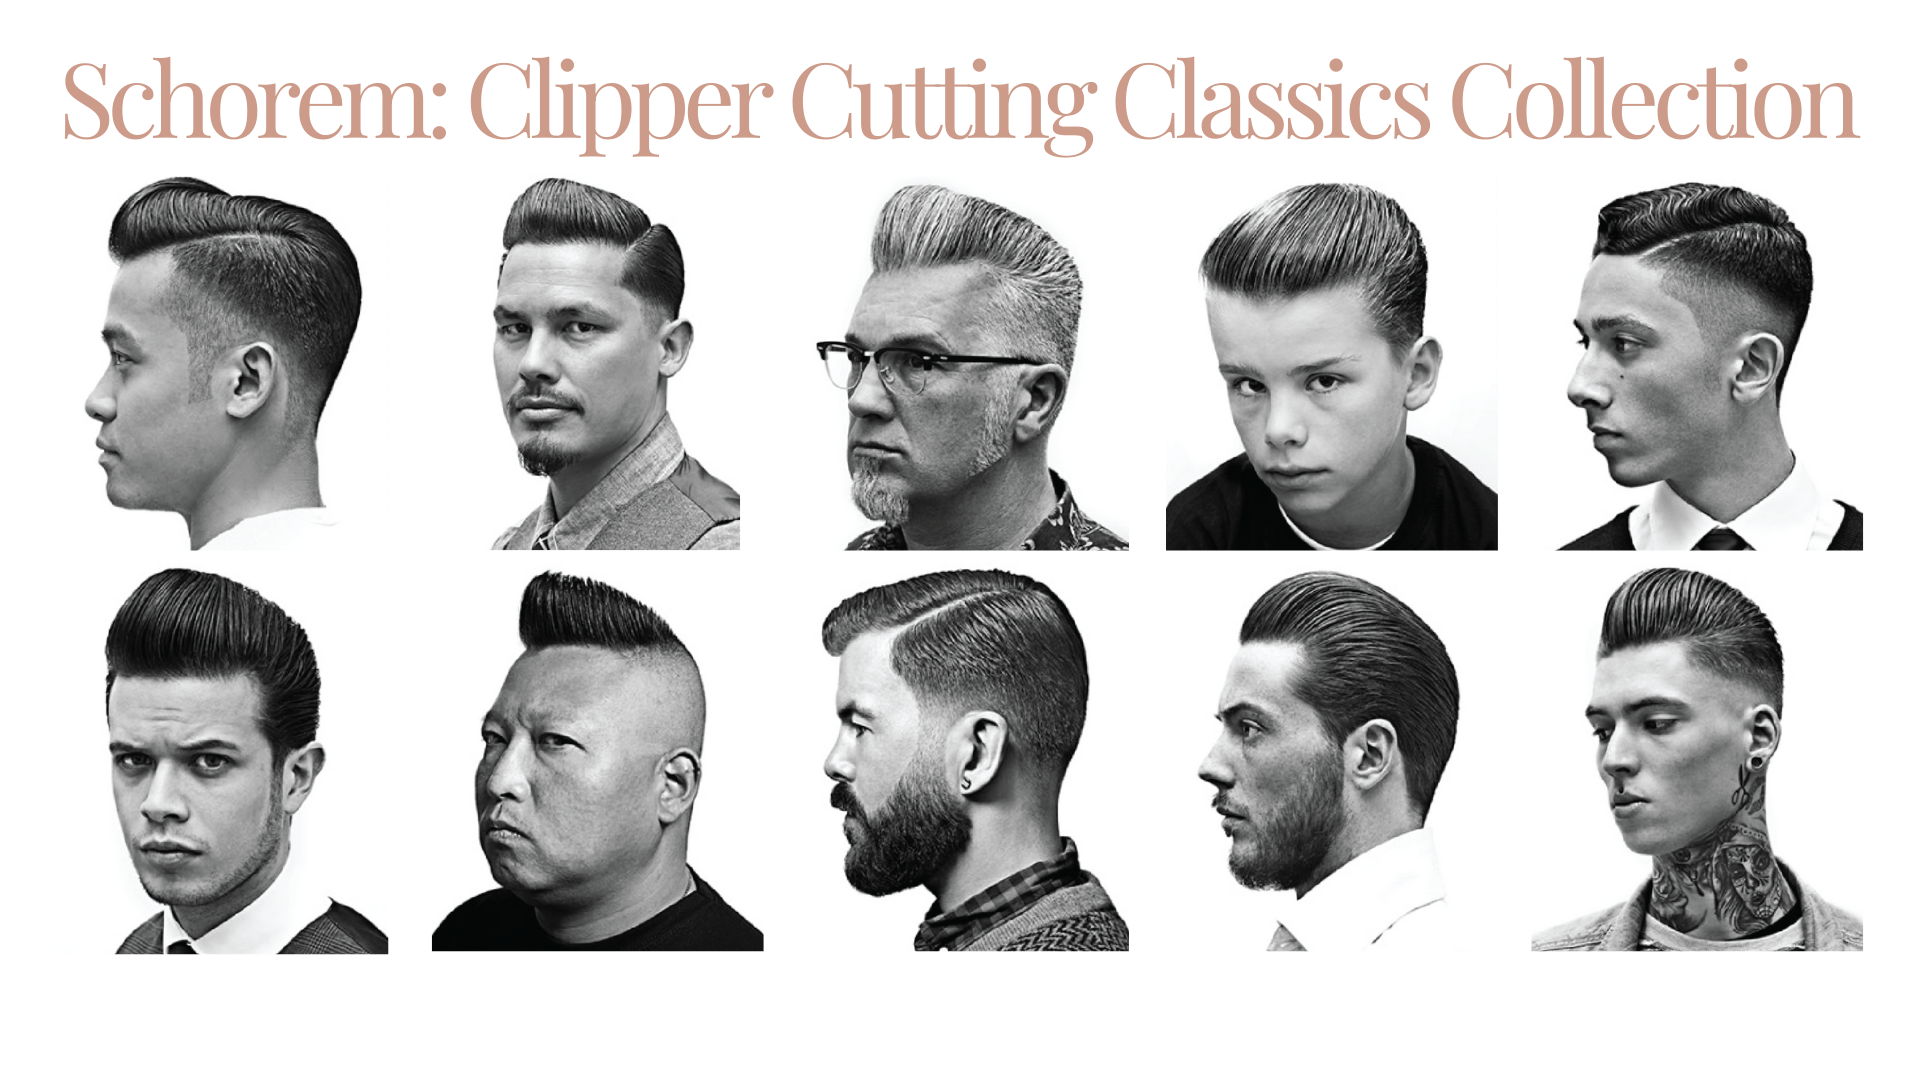 Schorem: Clipper Cutting Classics Collection